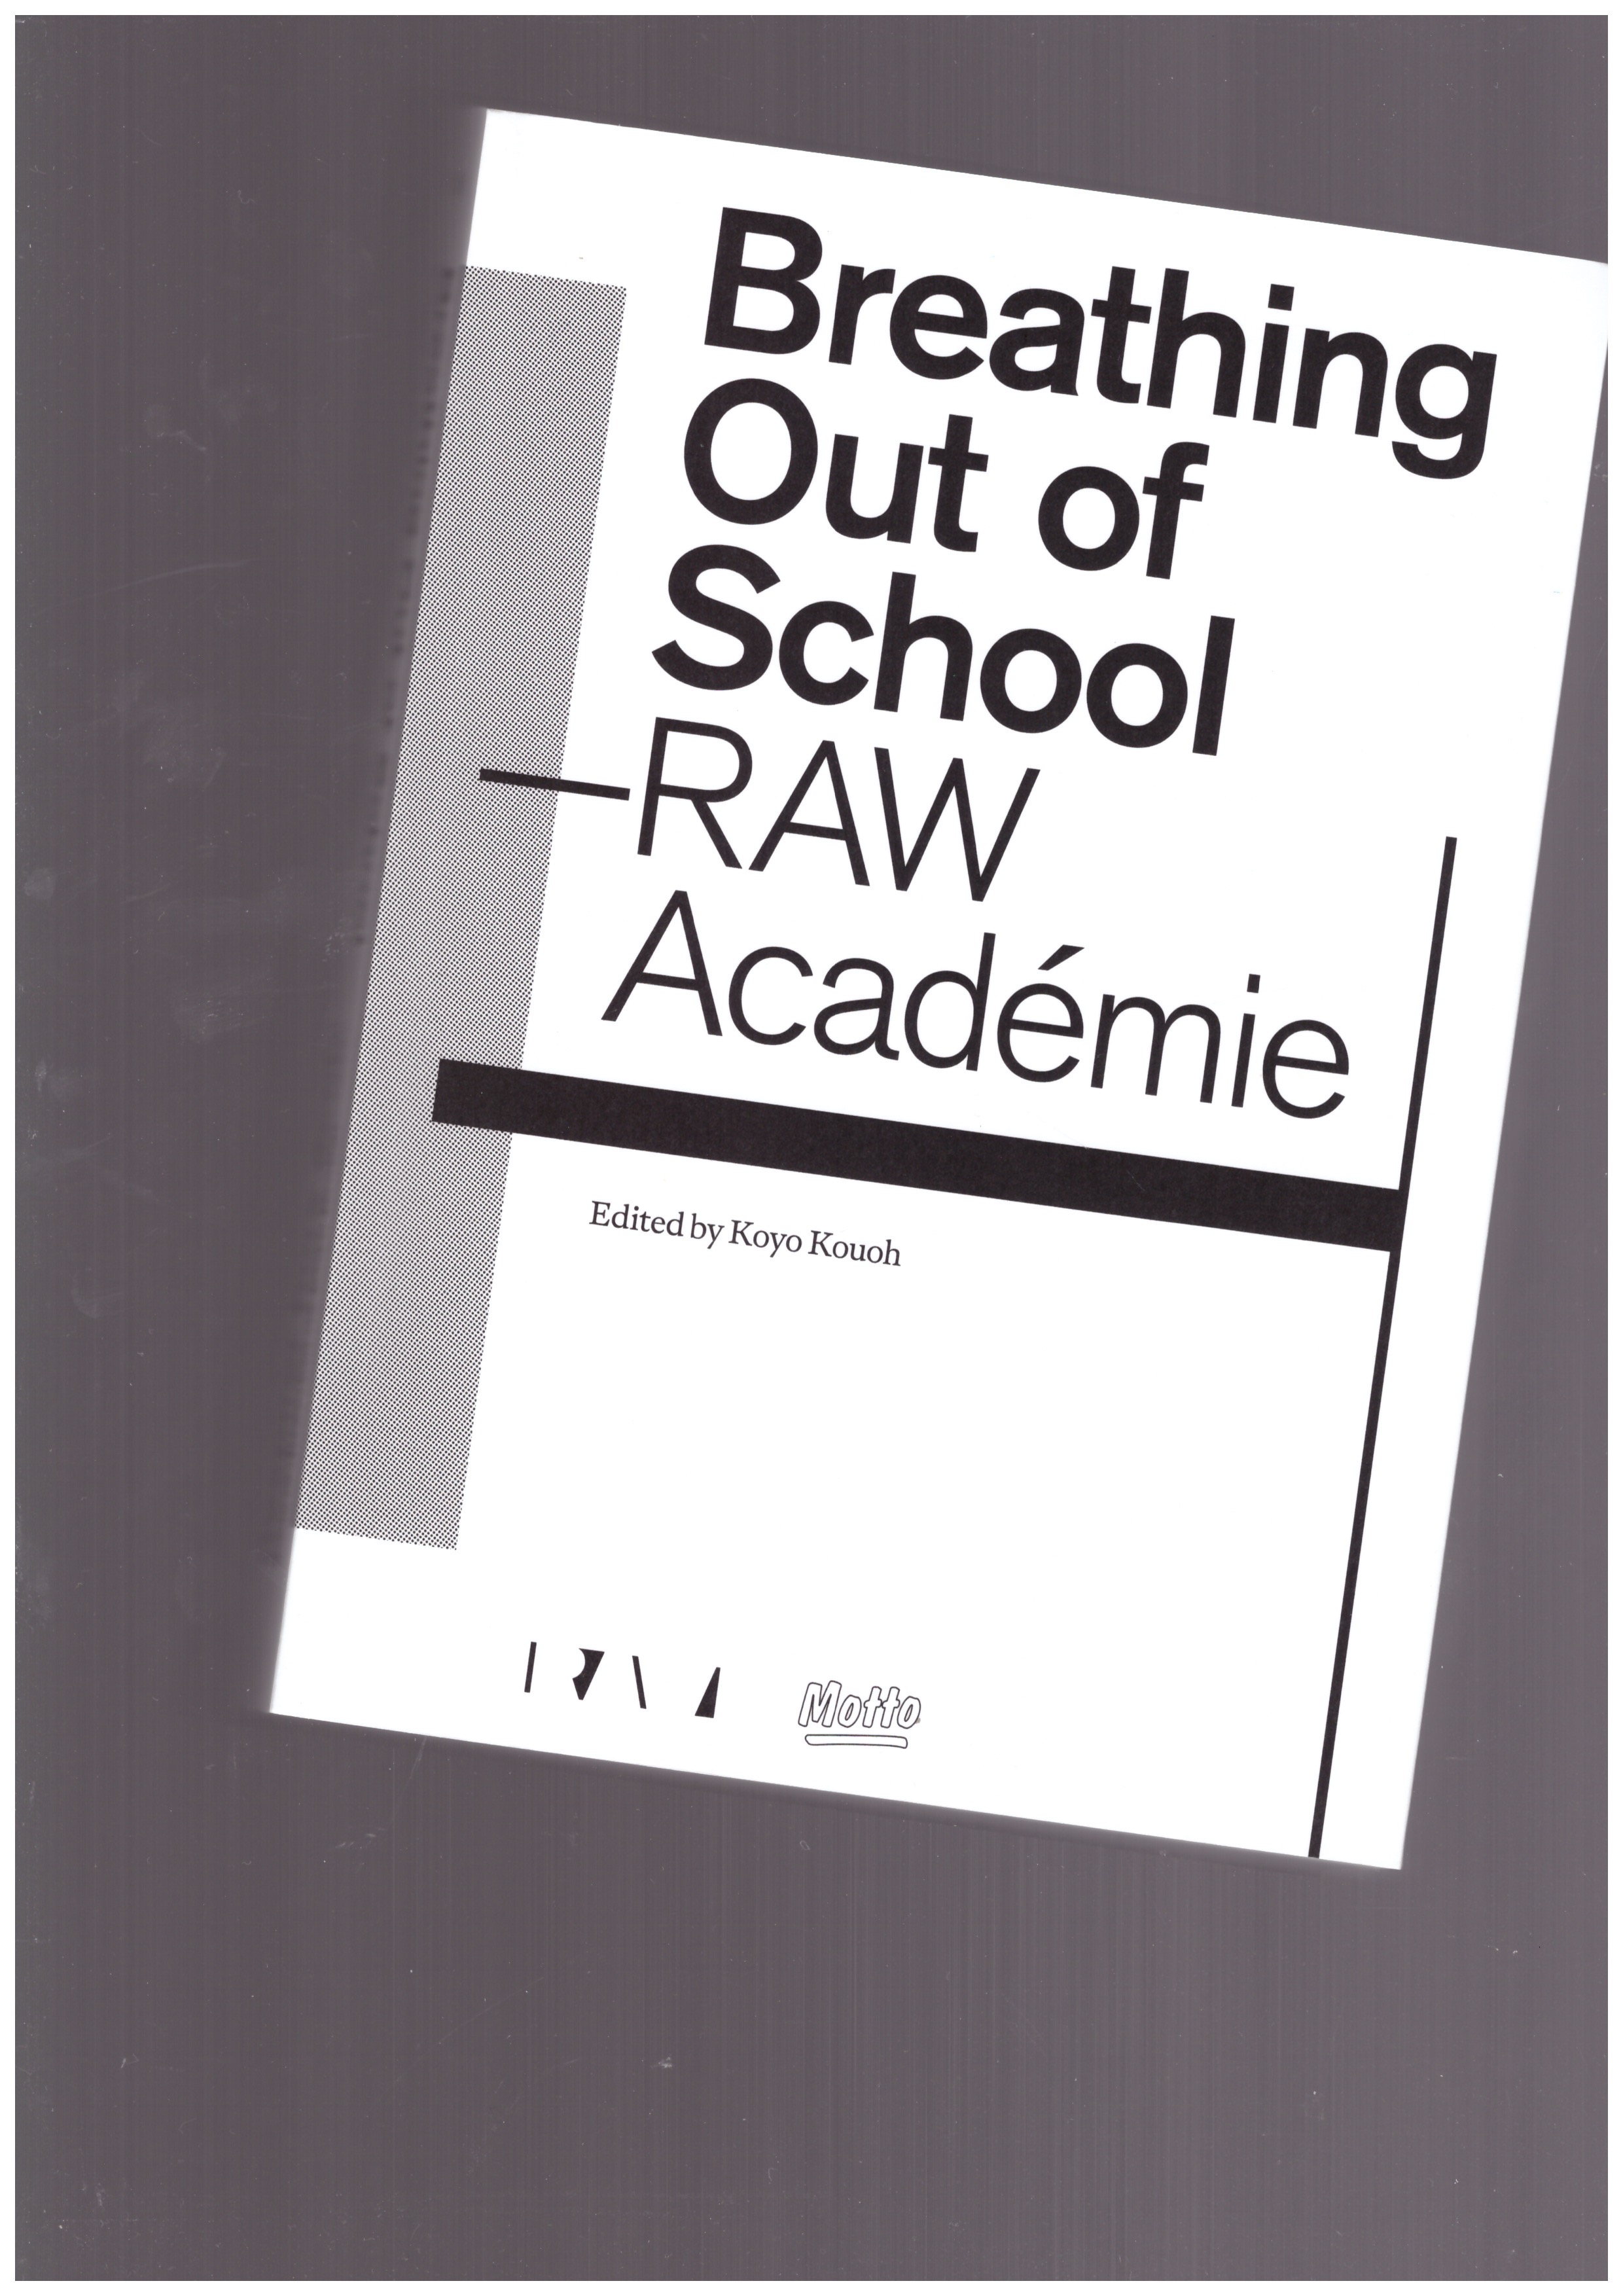 KOUOH, Koyo - Breathing Out of School - RAW Académie